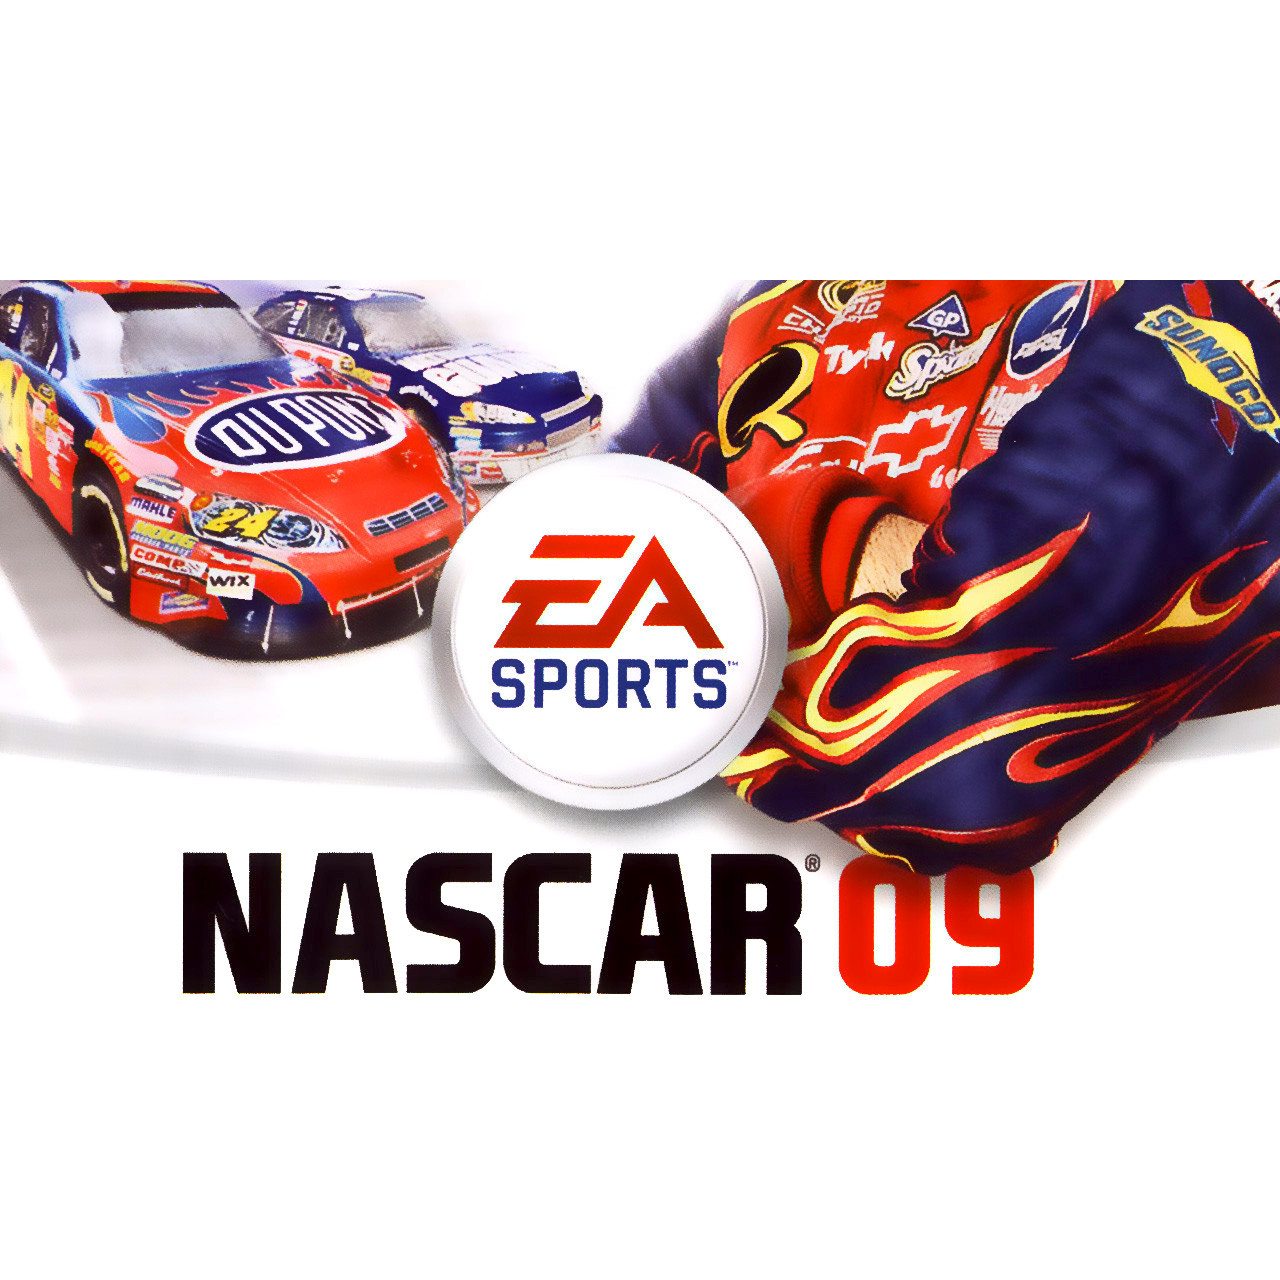 NASCAR 09 Sony PlayStation 2 Game